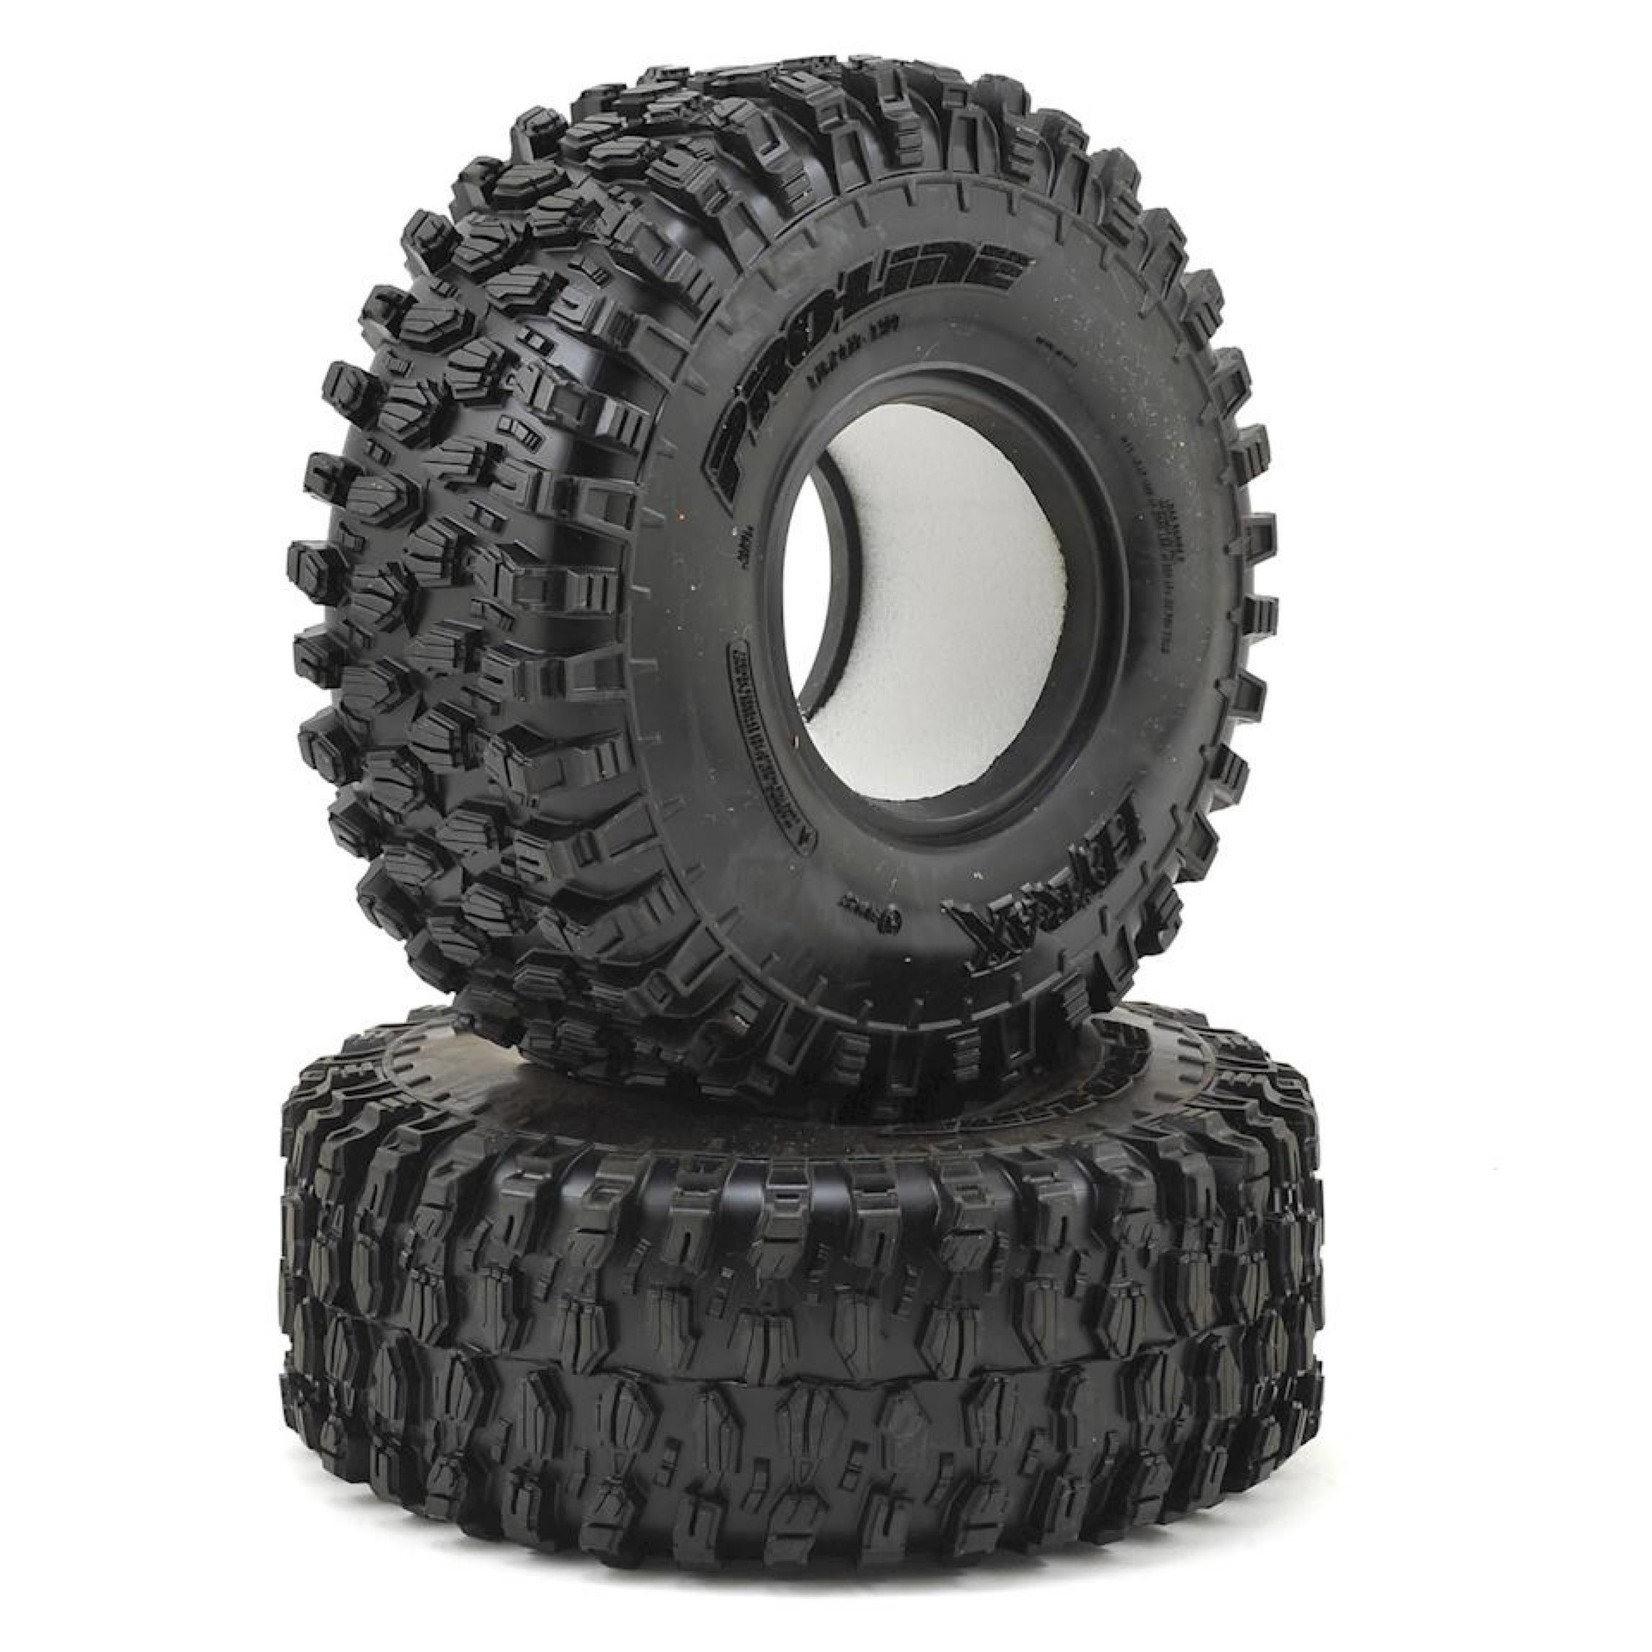 Pro-Line Pro-Line Hyrax 1.9" Rock Crawler Tires (2) (G8) #10128-14